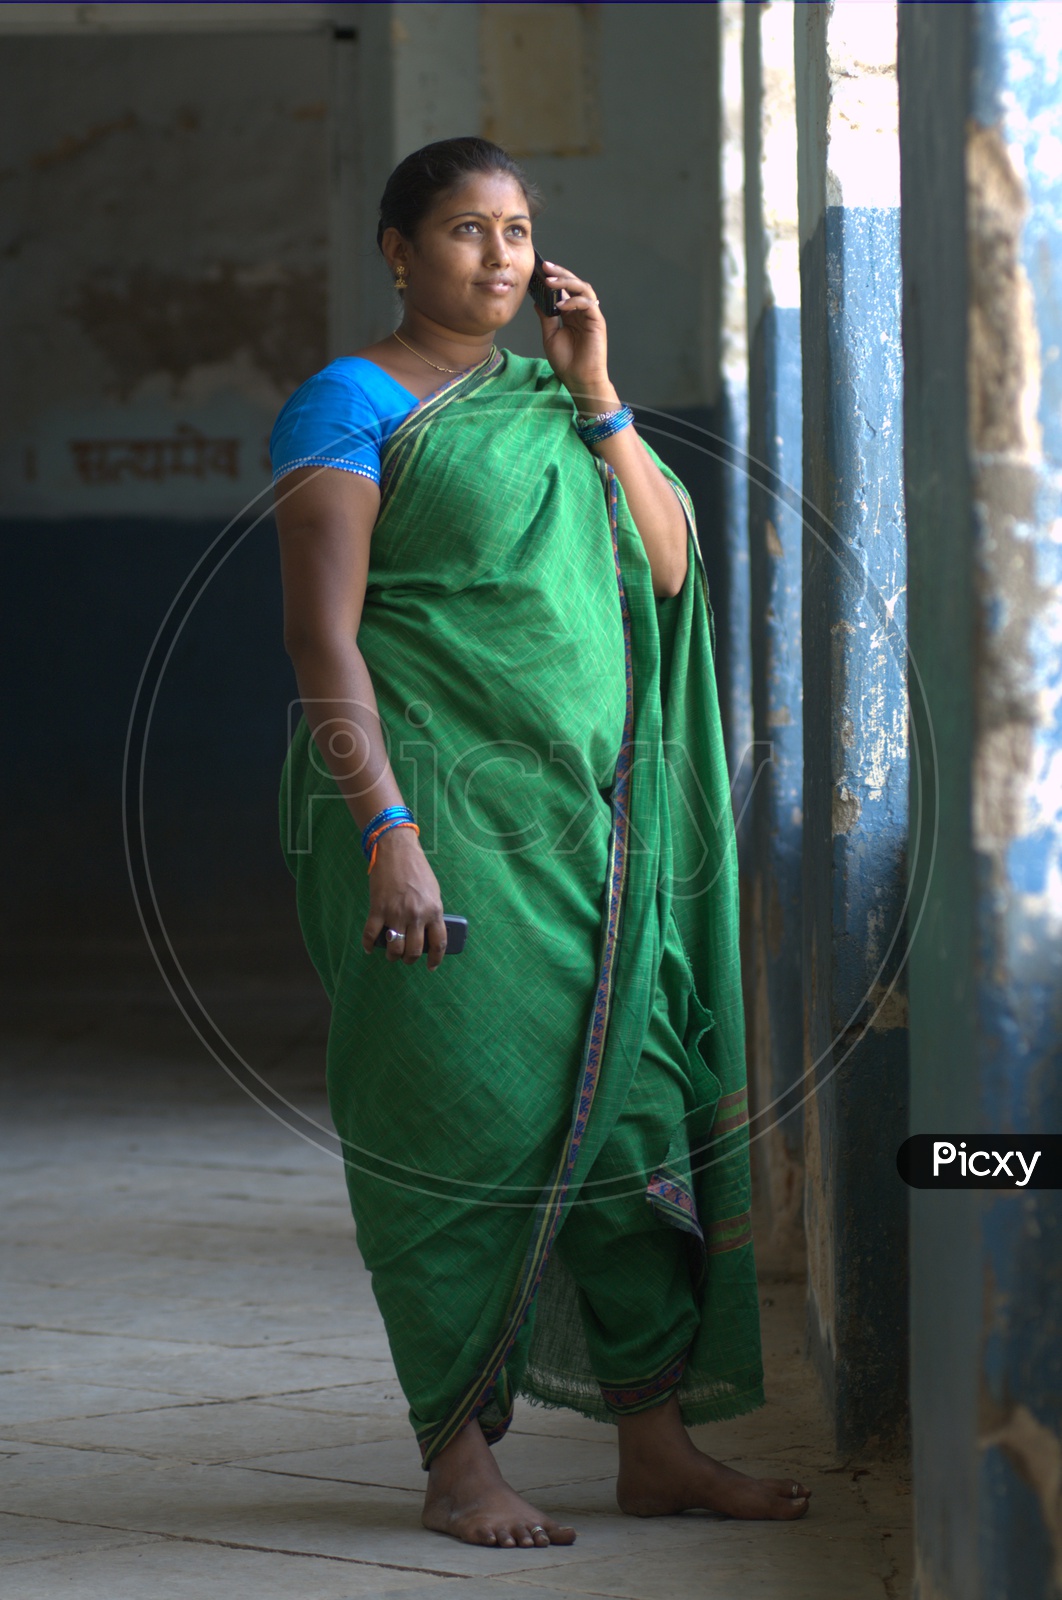 Indian Rural Woman Speaking In Mobile Phone